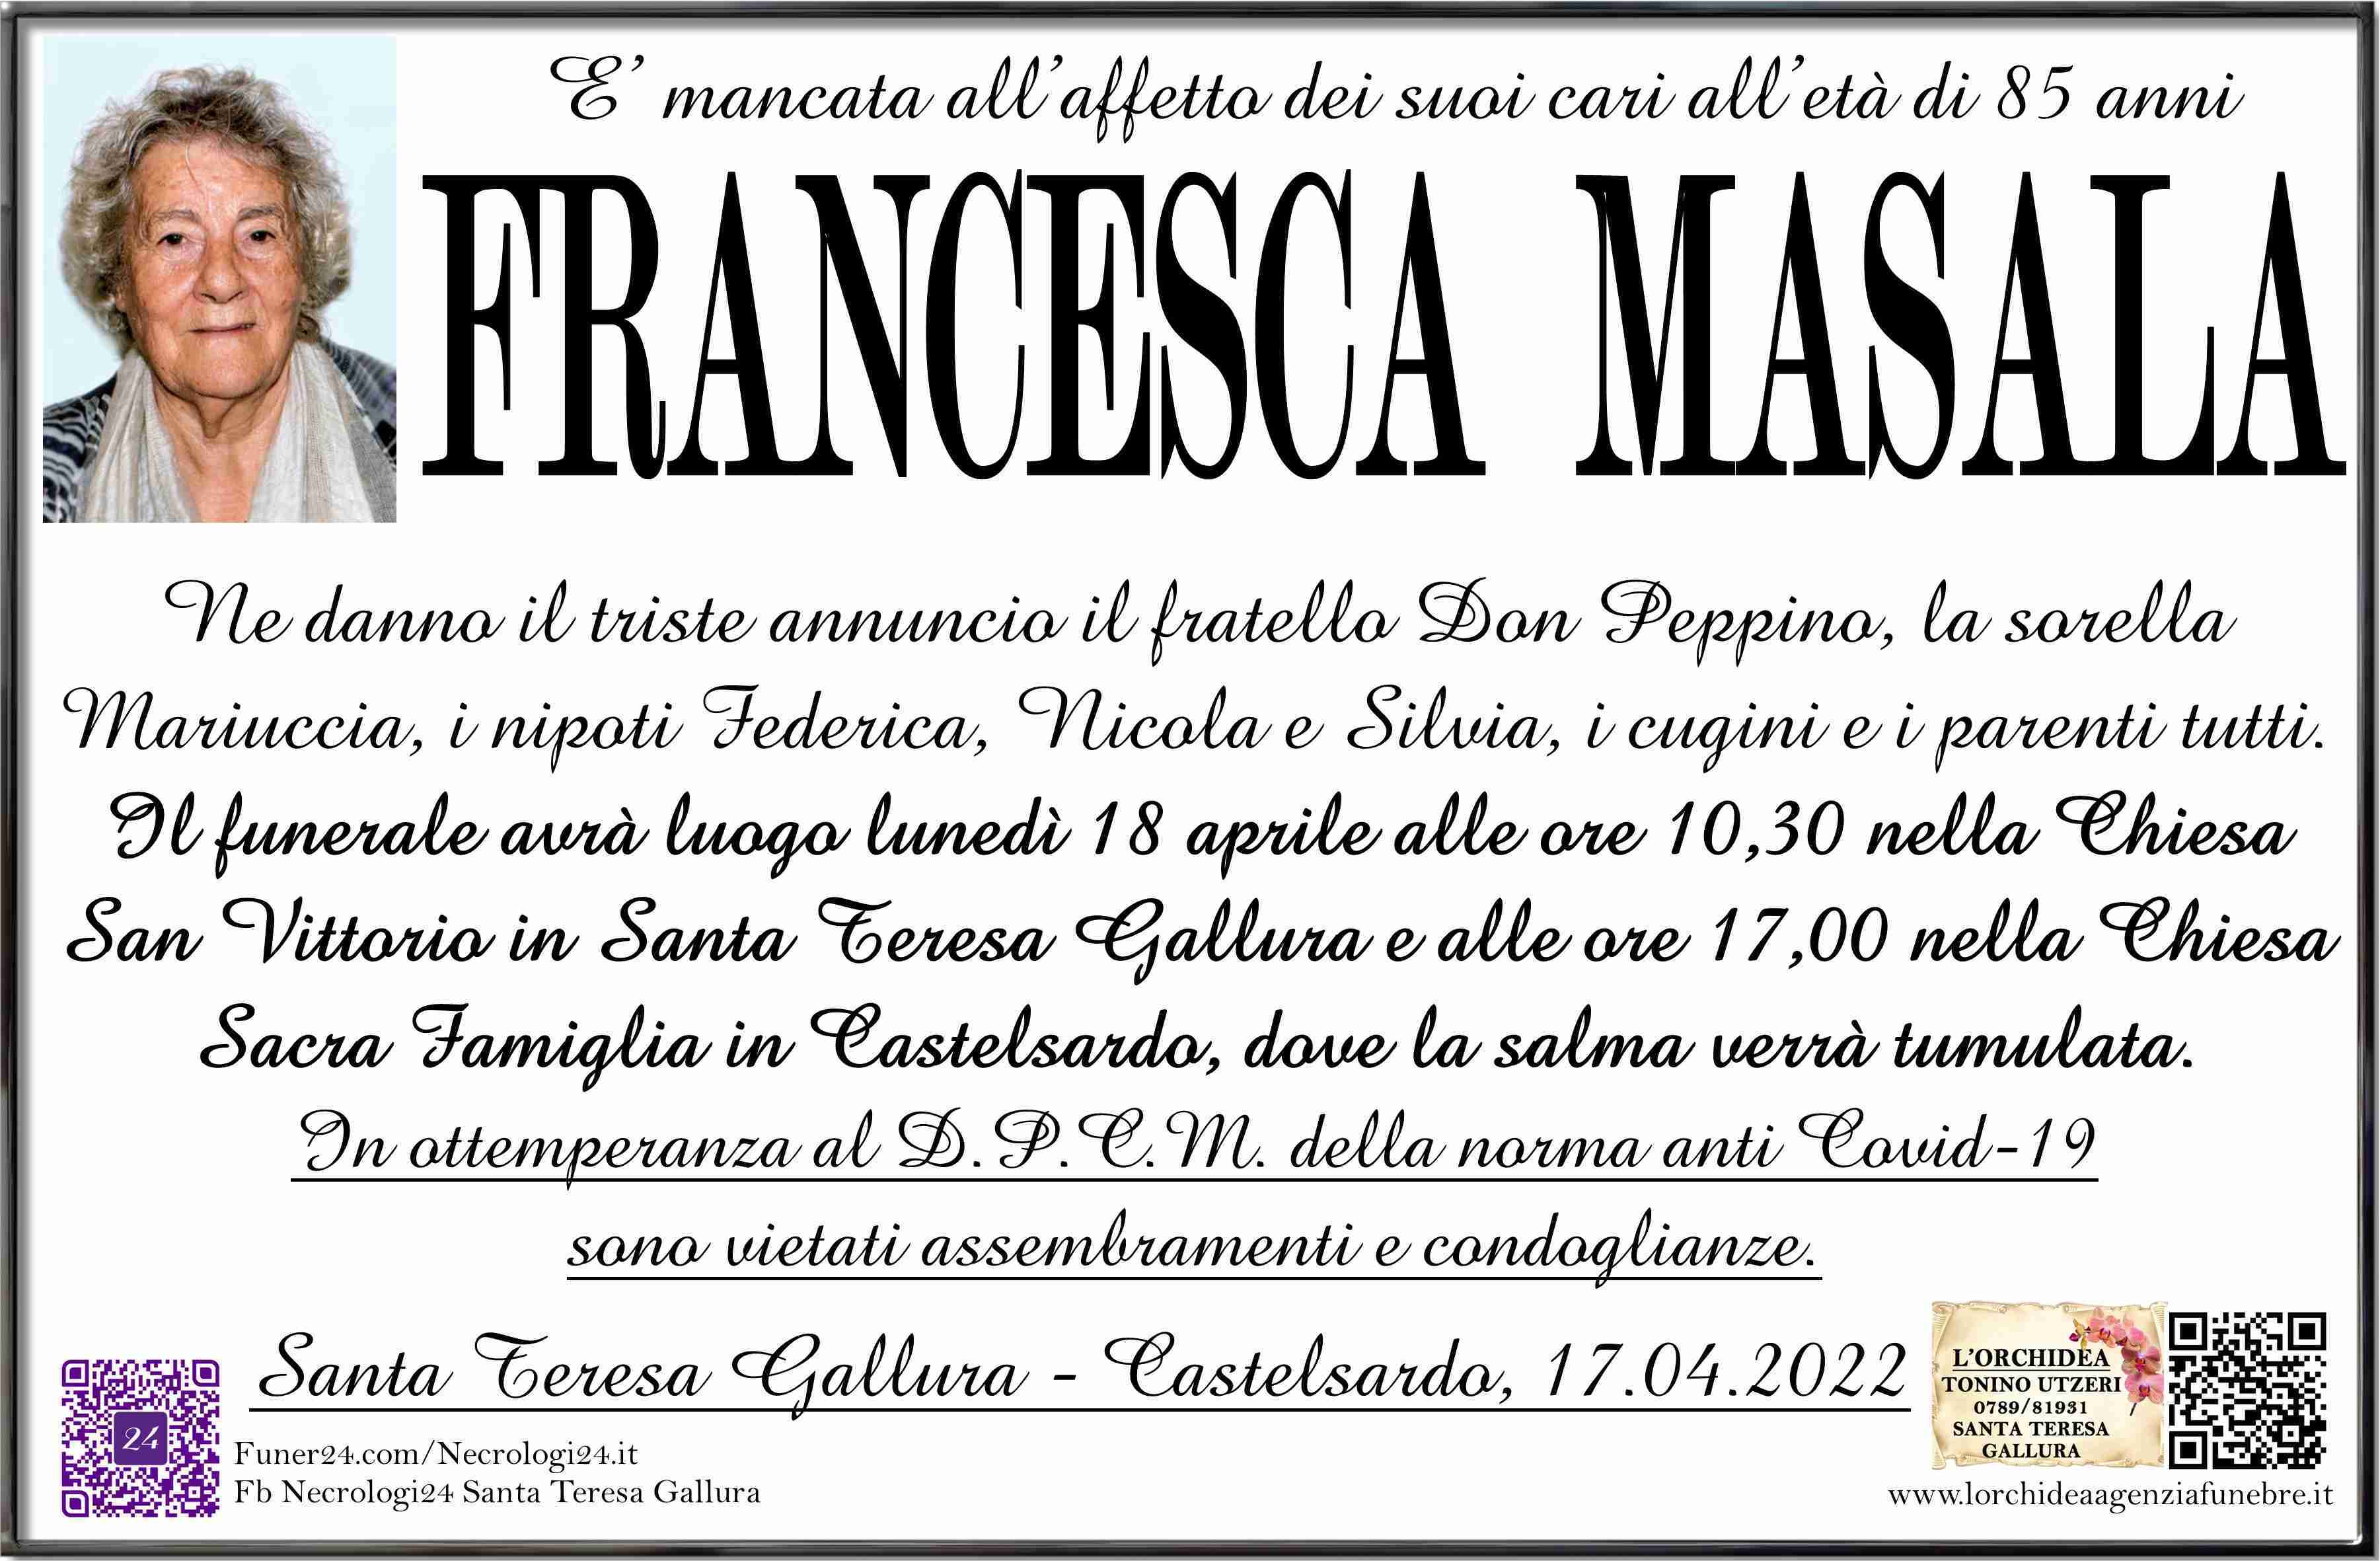 Francesca Masala